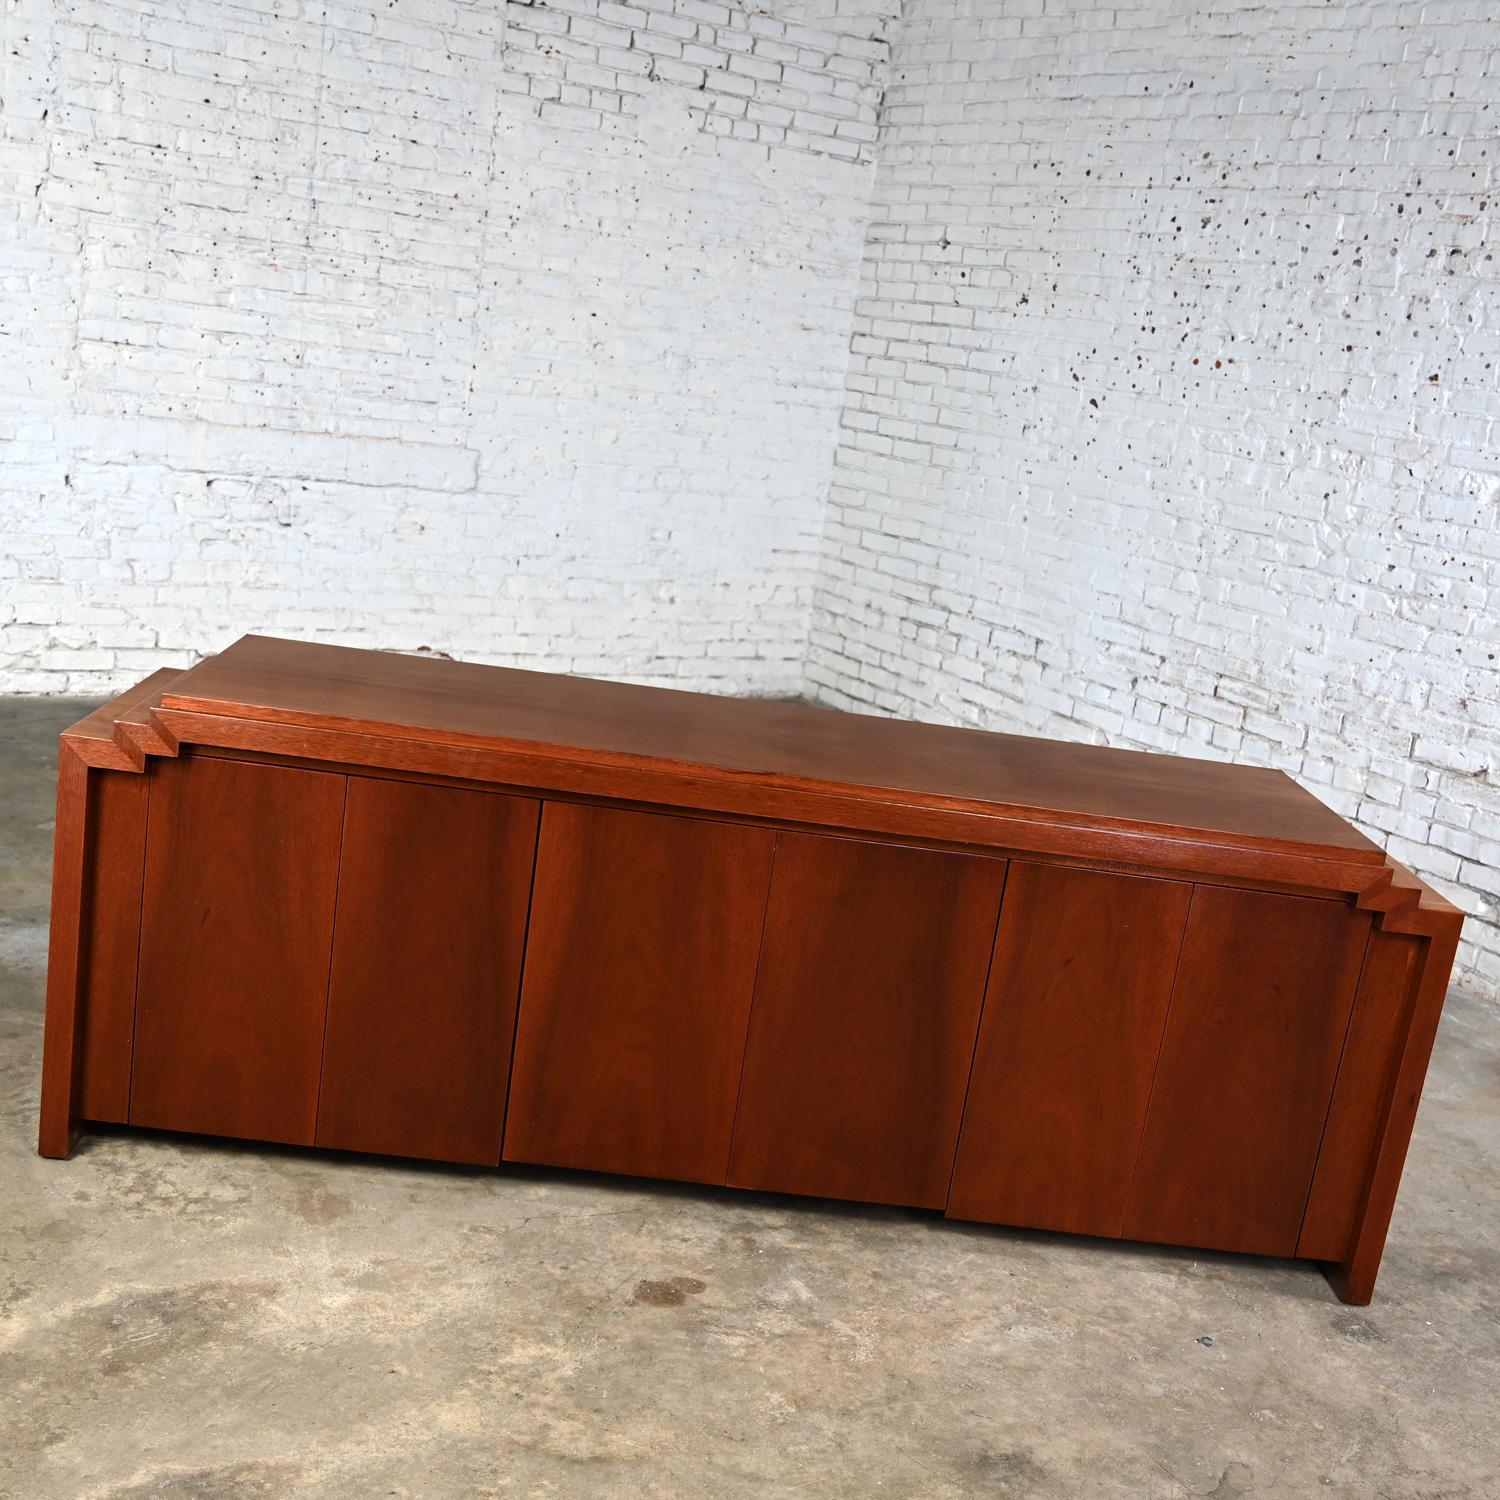 American Art Deco Revival to Postmodern Custom Mahogany Credenza Sideboard Buffet Cabinet